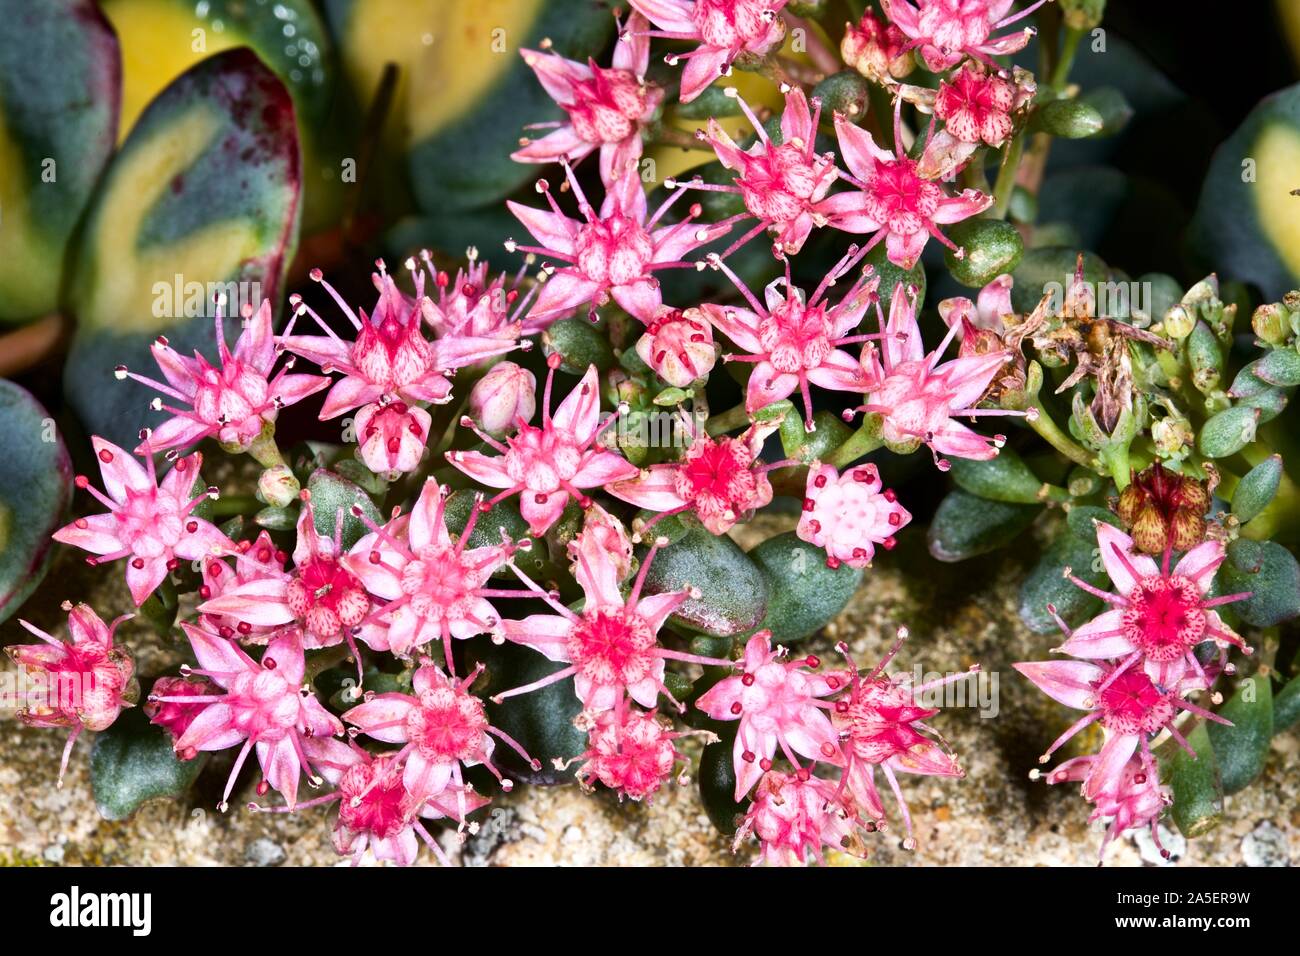 Beautiful pink star-shaped flowers of a Sedum Stock Photo